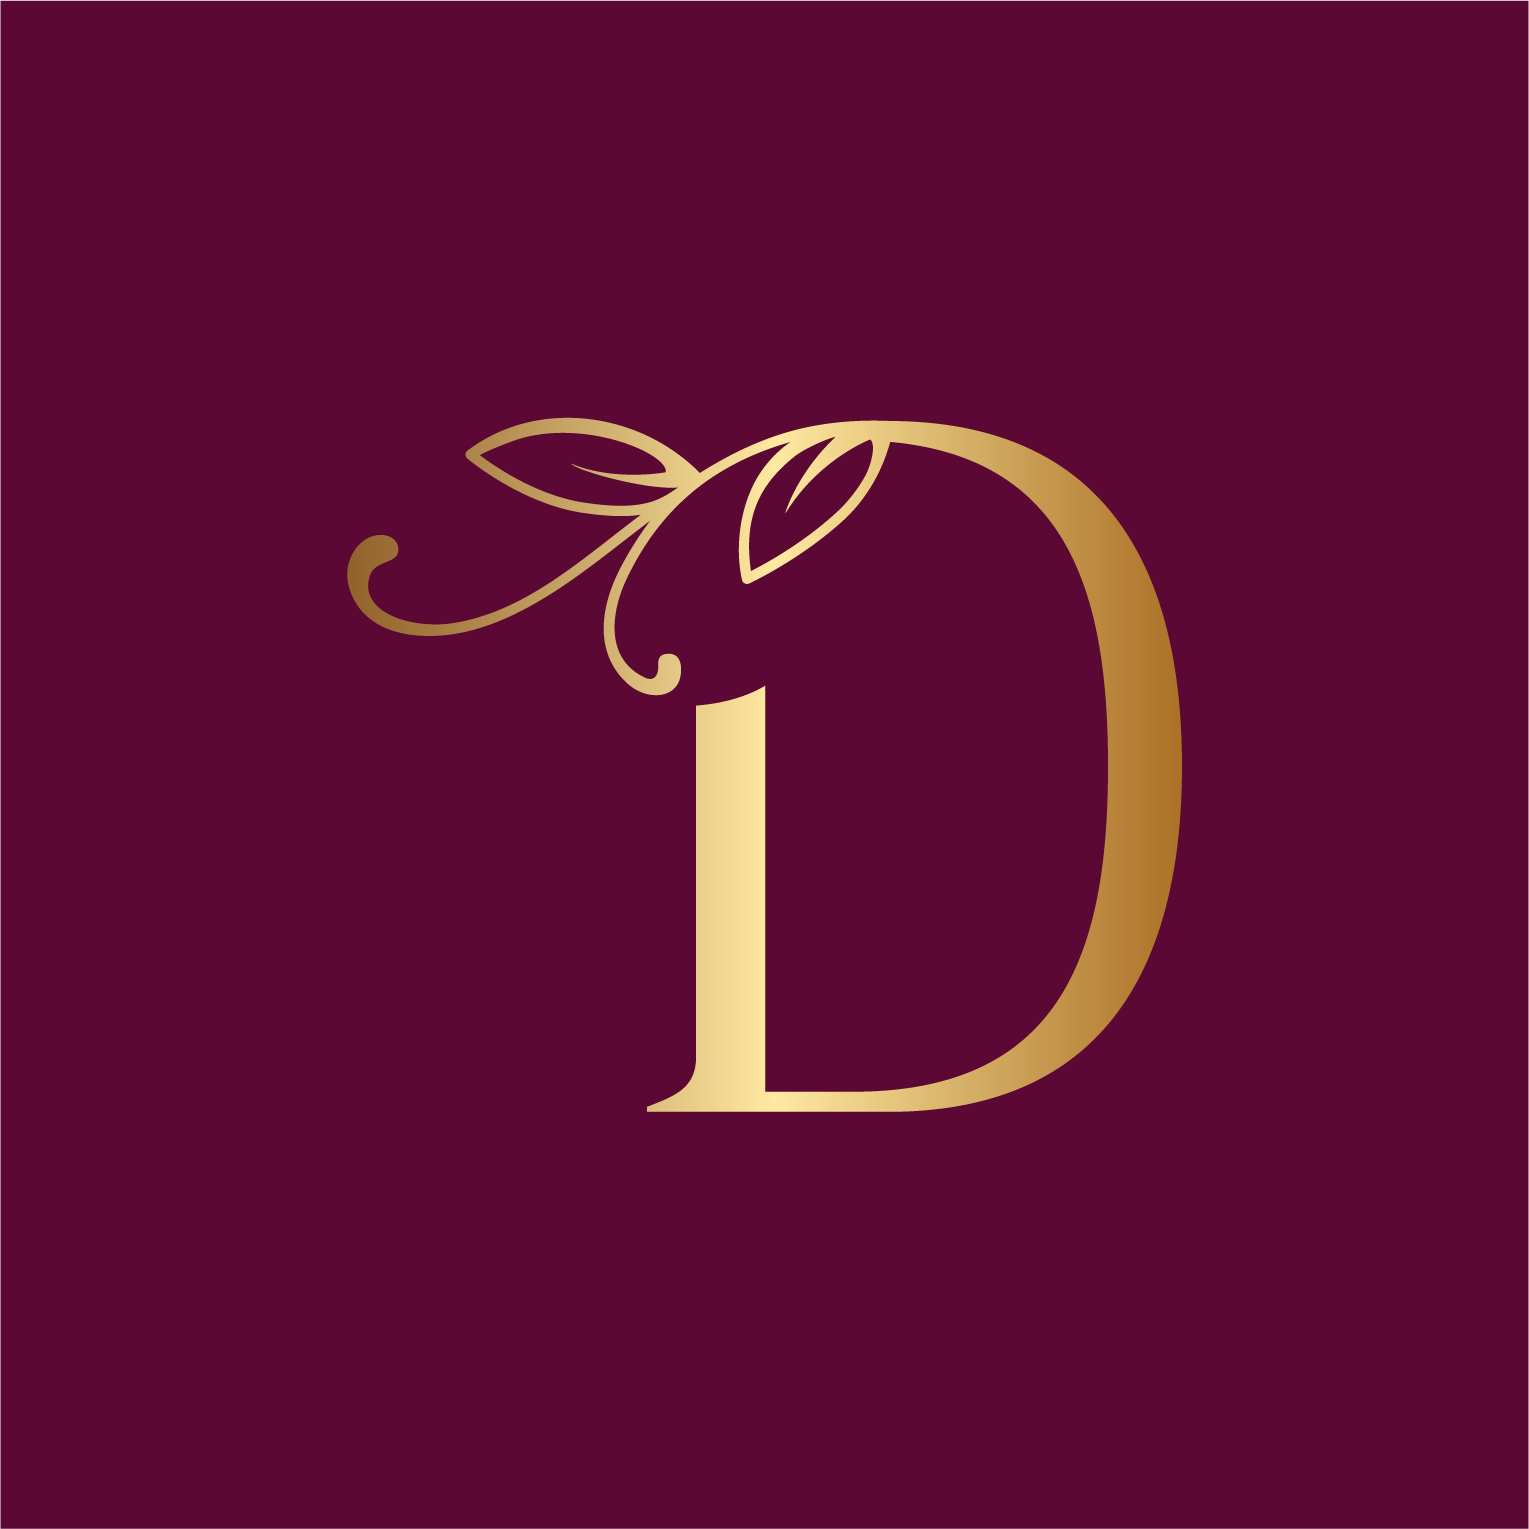 Awesome Floral Logo Design Letter D for your designs.